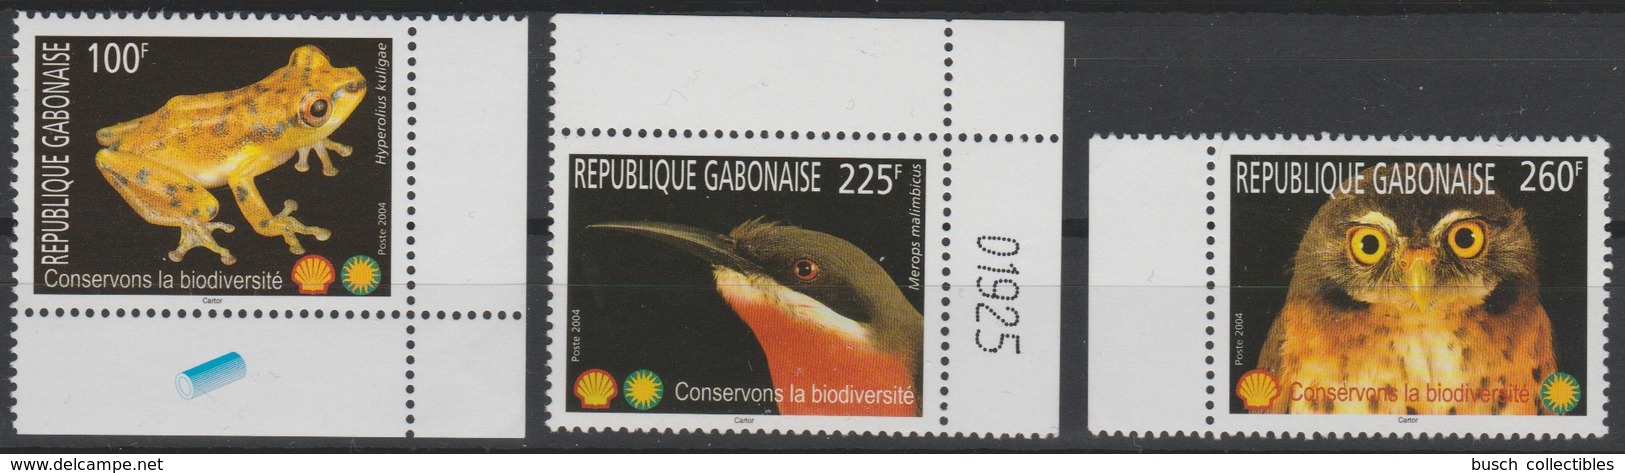 Gabon Gabun 2004 Mi. 1673 1675 1676 Conservons La Biodiversité Faune Fauna Bird Owl Reptile ULTRA Scarce  MNH** - Gabon (1960-...)